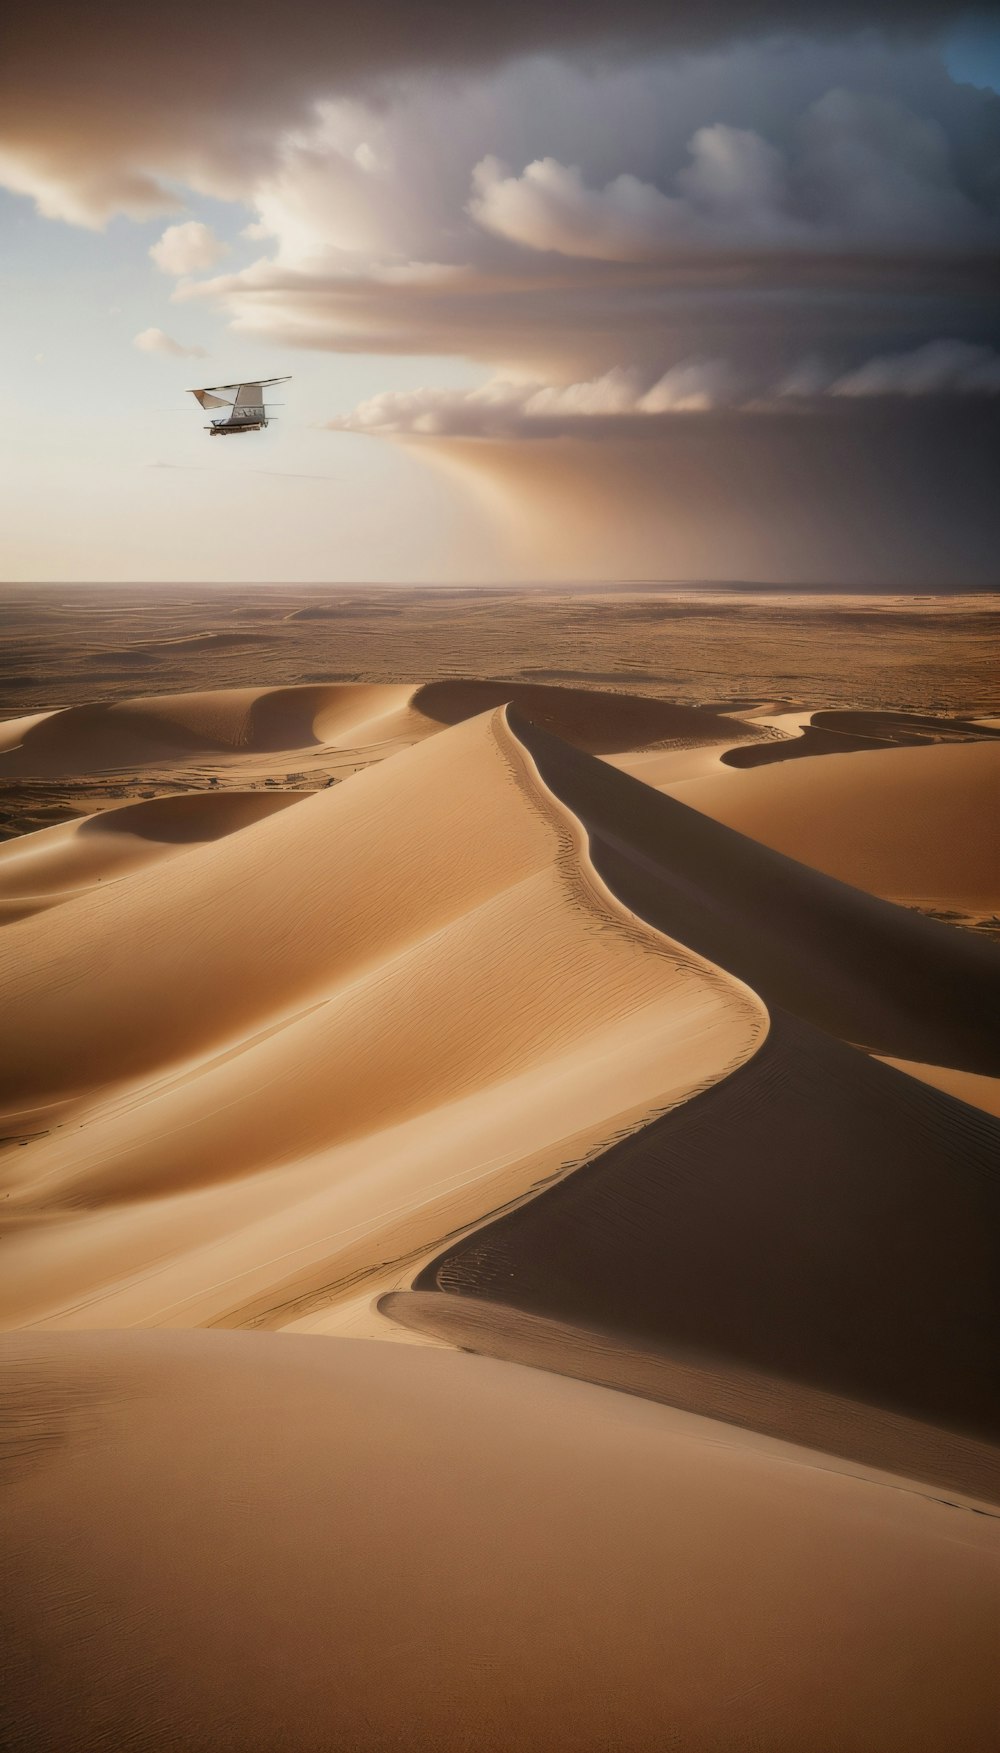 a plane flying over a desert under a cloudy sky